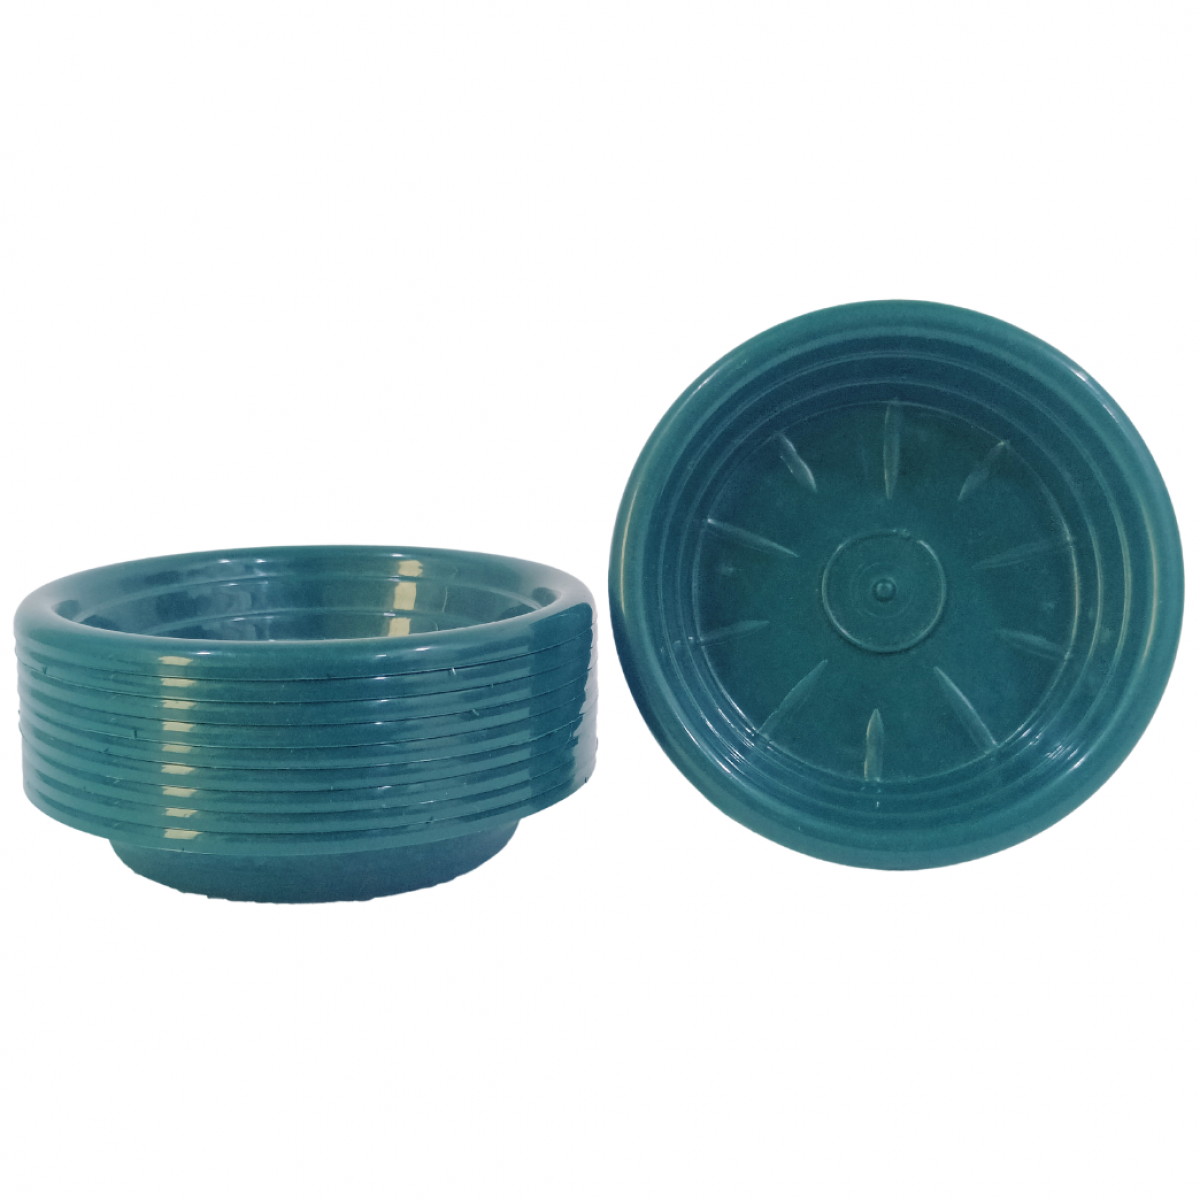 5410 10CM Plastic Tray Green - 10 No